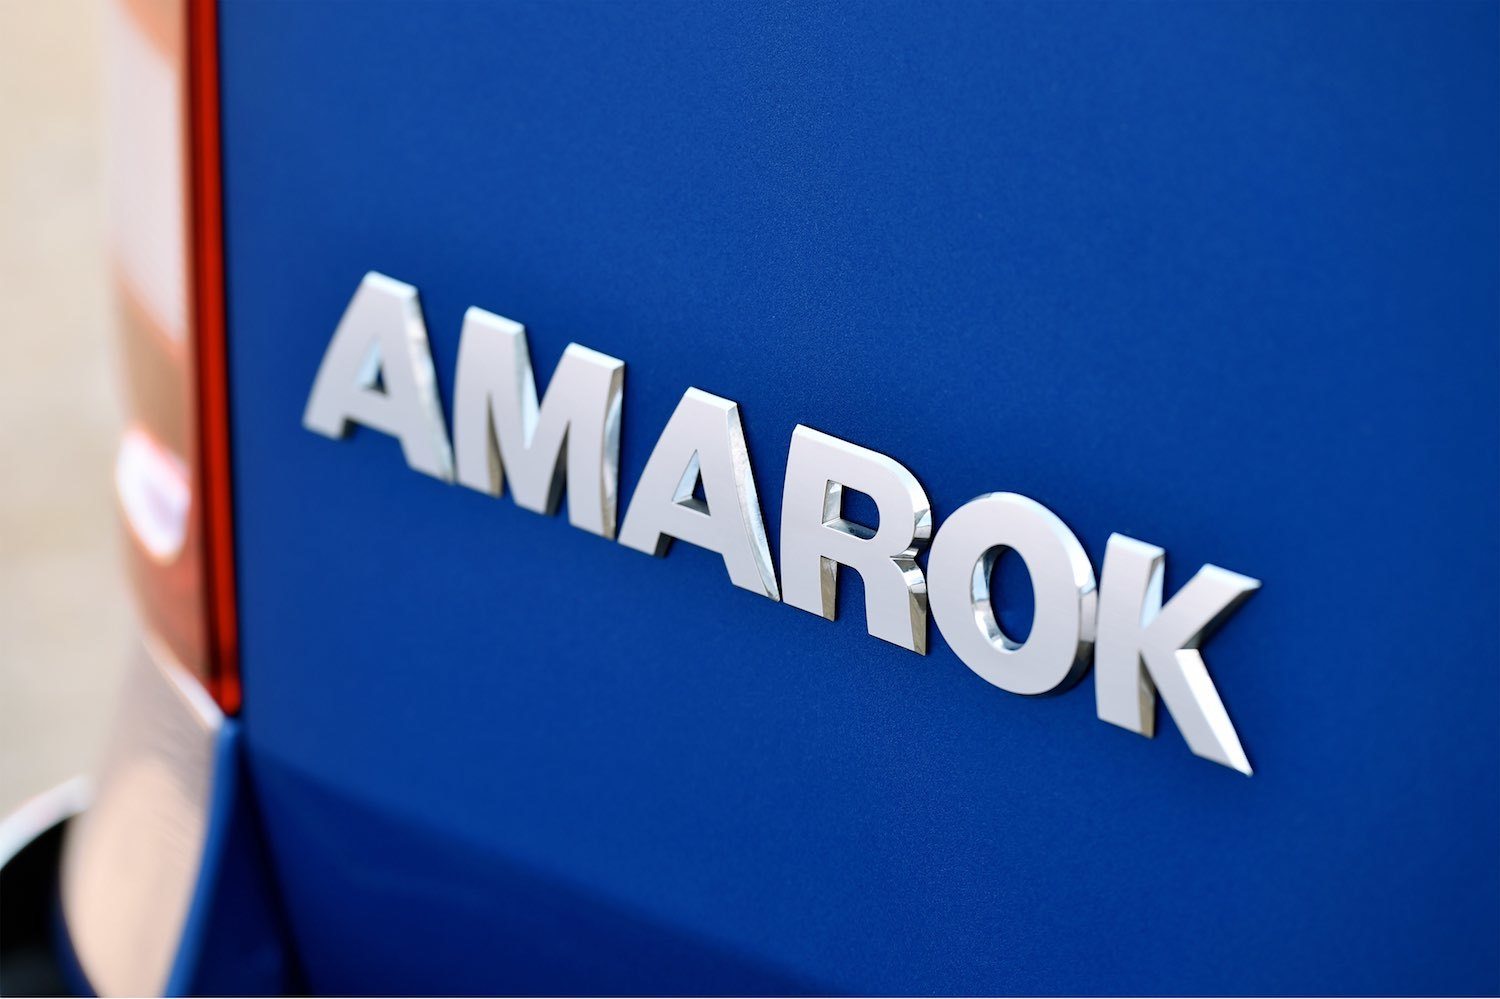 Neil Lyndon reviews the latest Volkswagen Amarok 14